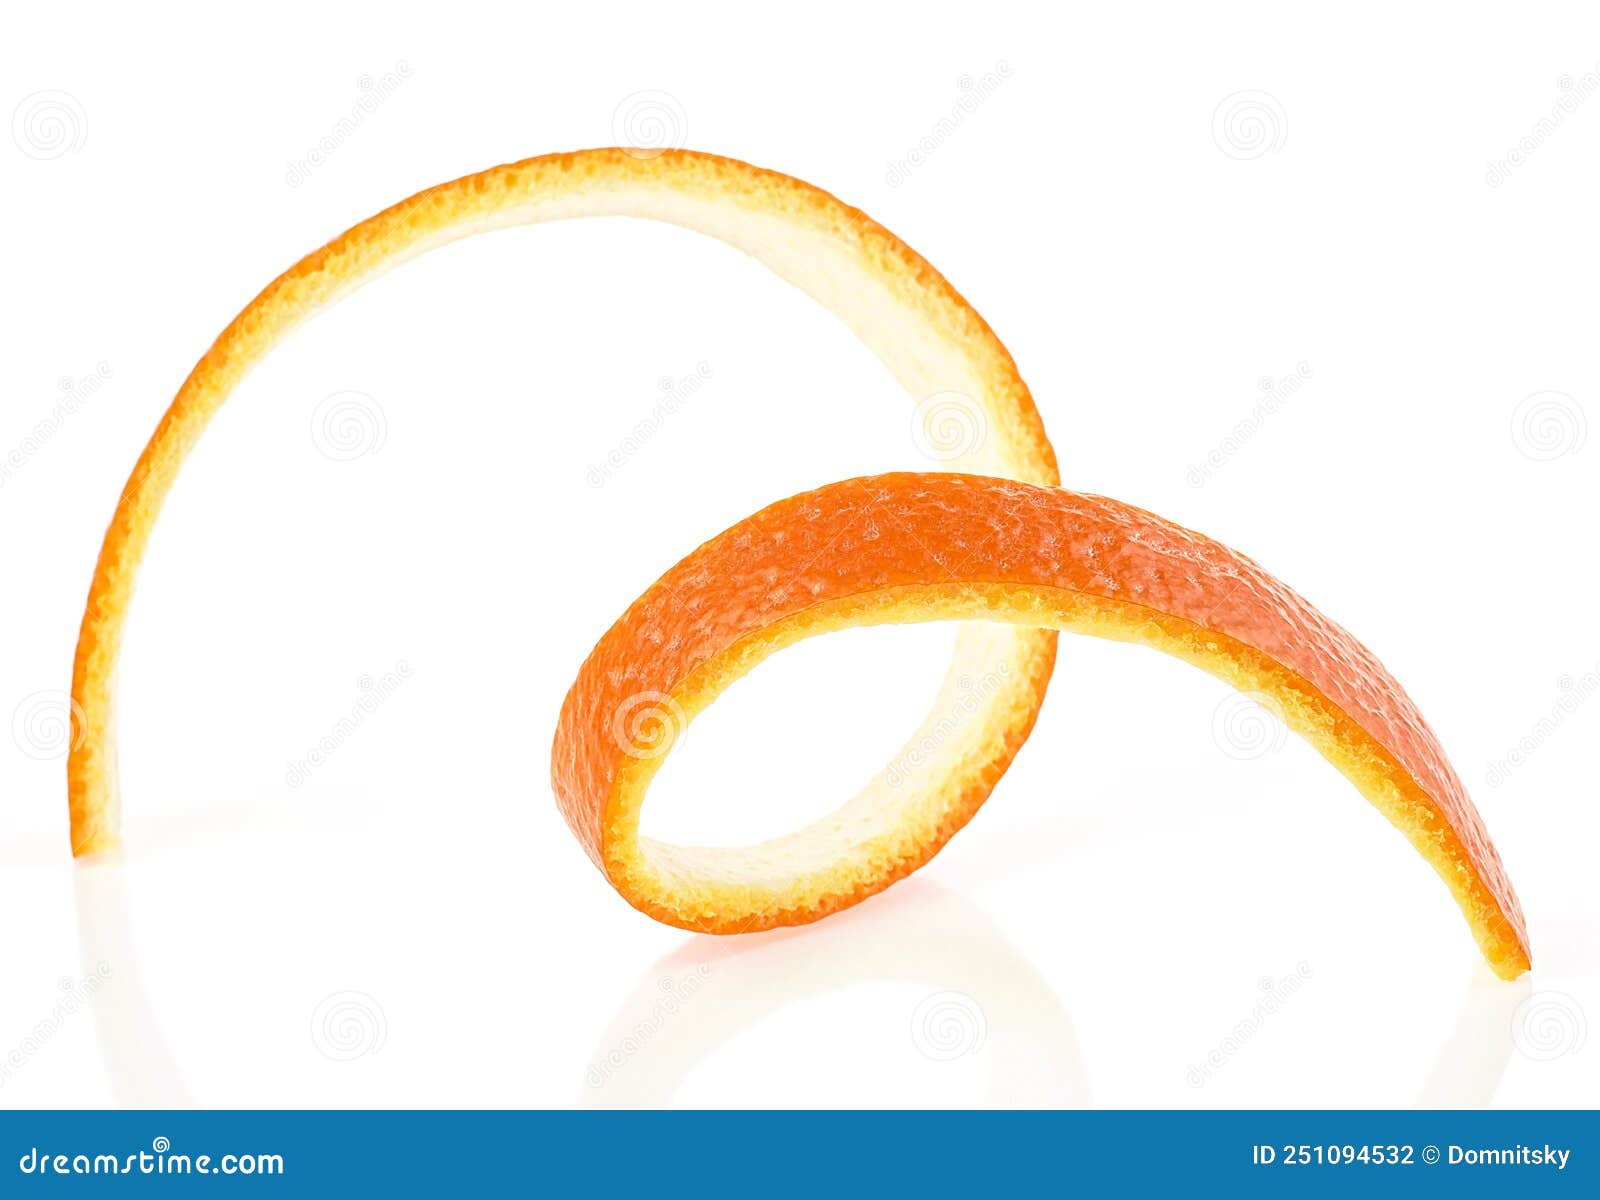 Orange Peel Isolated On White Background Spiral Orange Skin Stock